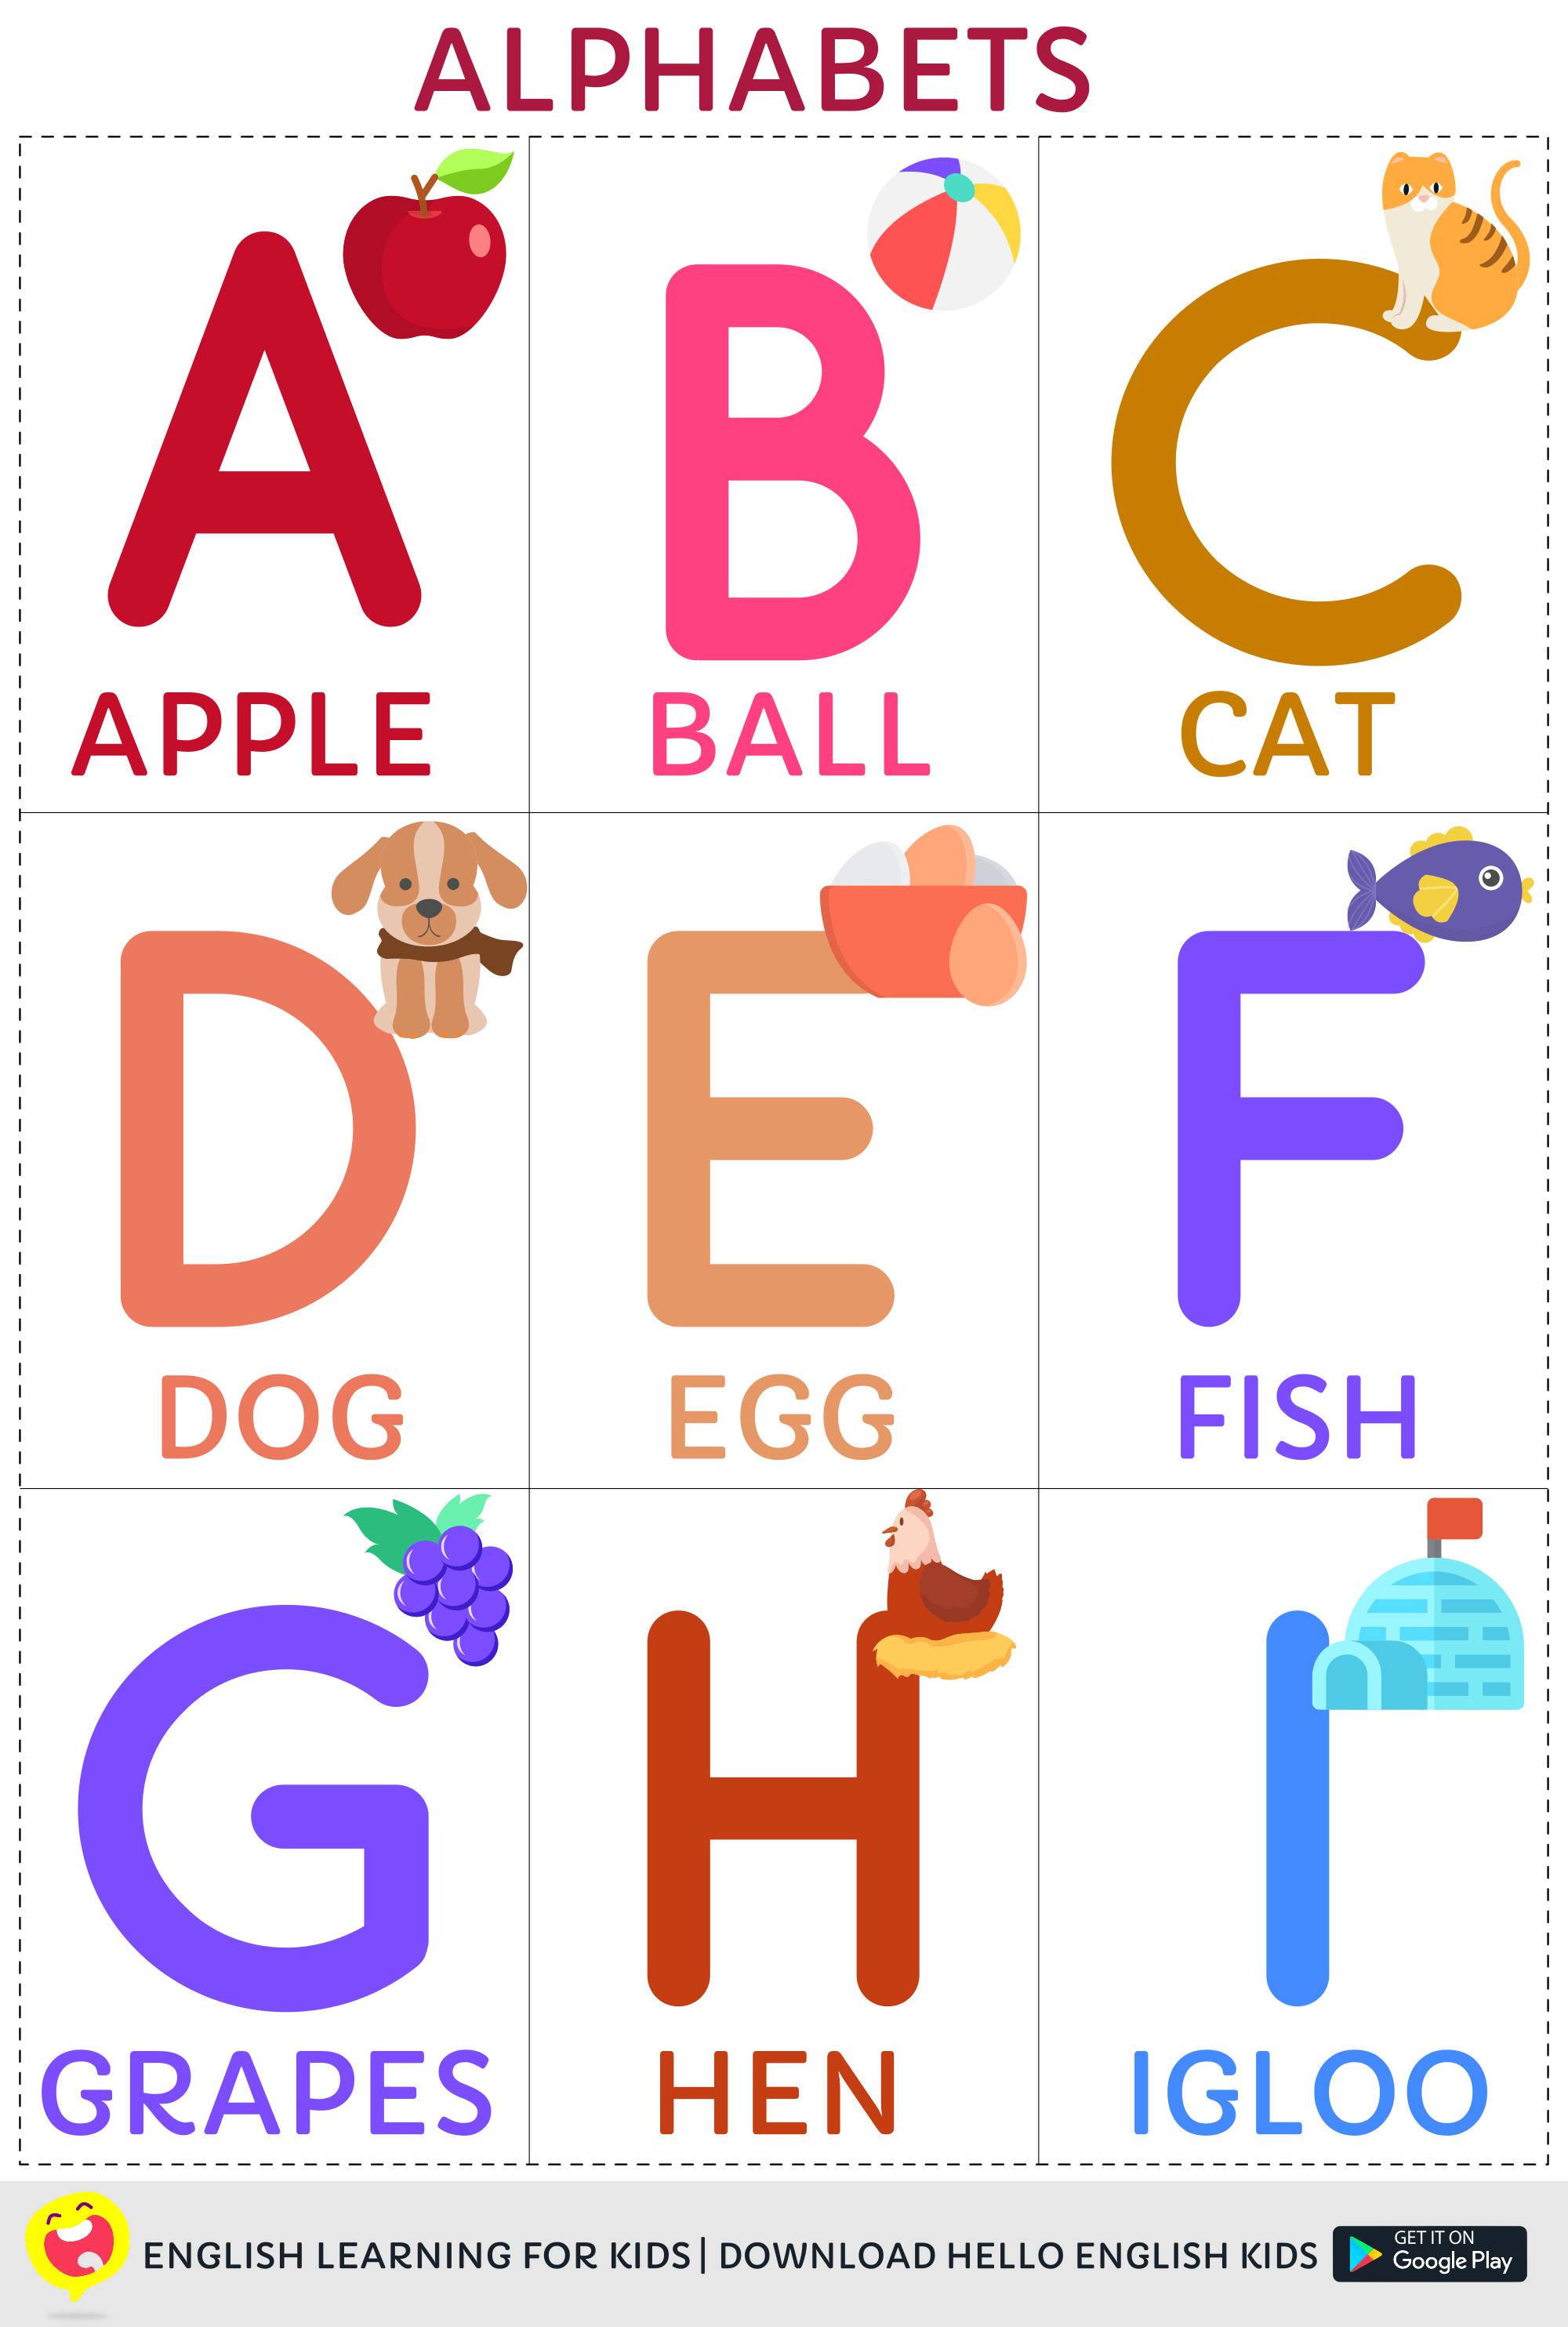 hello english kids printable a z alphabets kids app by helloenglish